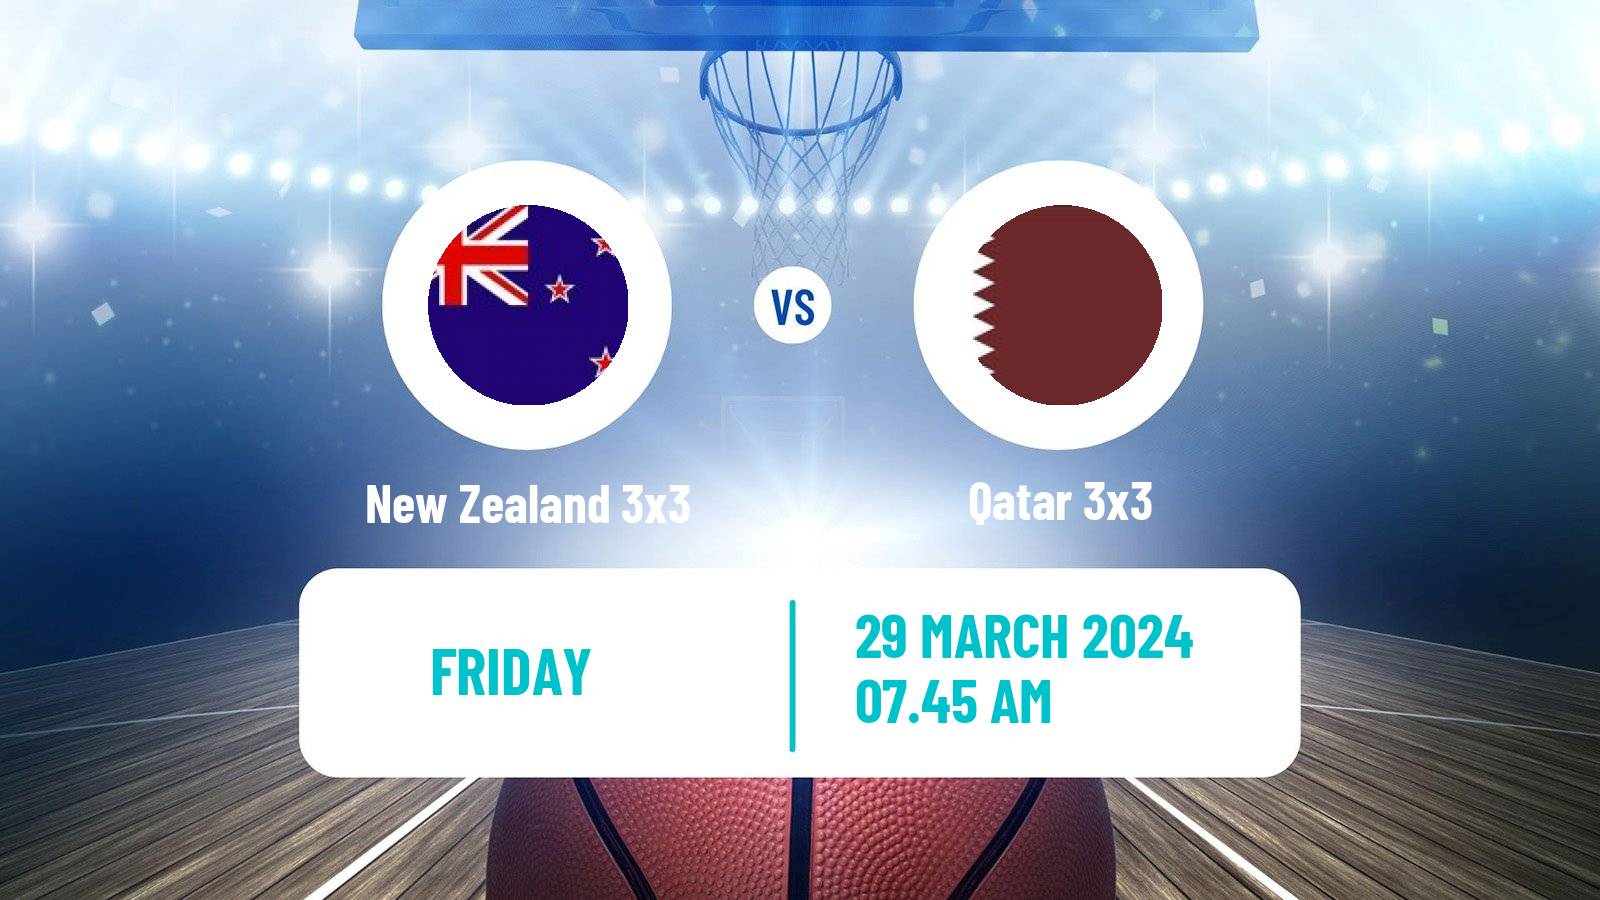 Basketball Asia Cup 3x3 New Zealand 3x3 - Qatar 3x3